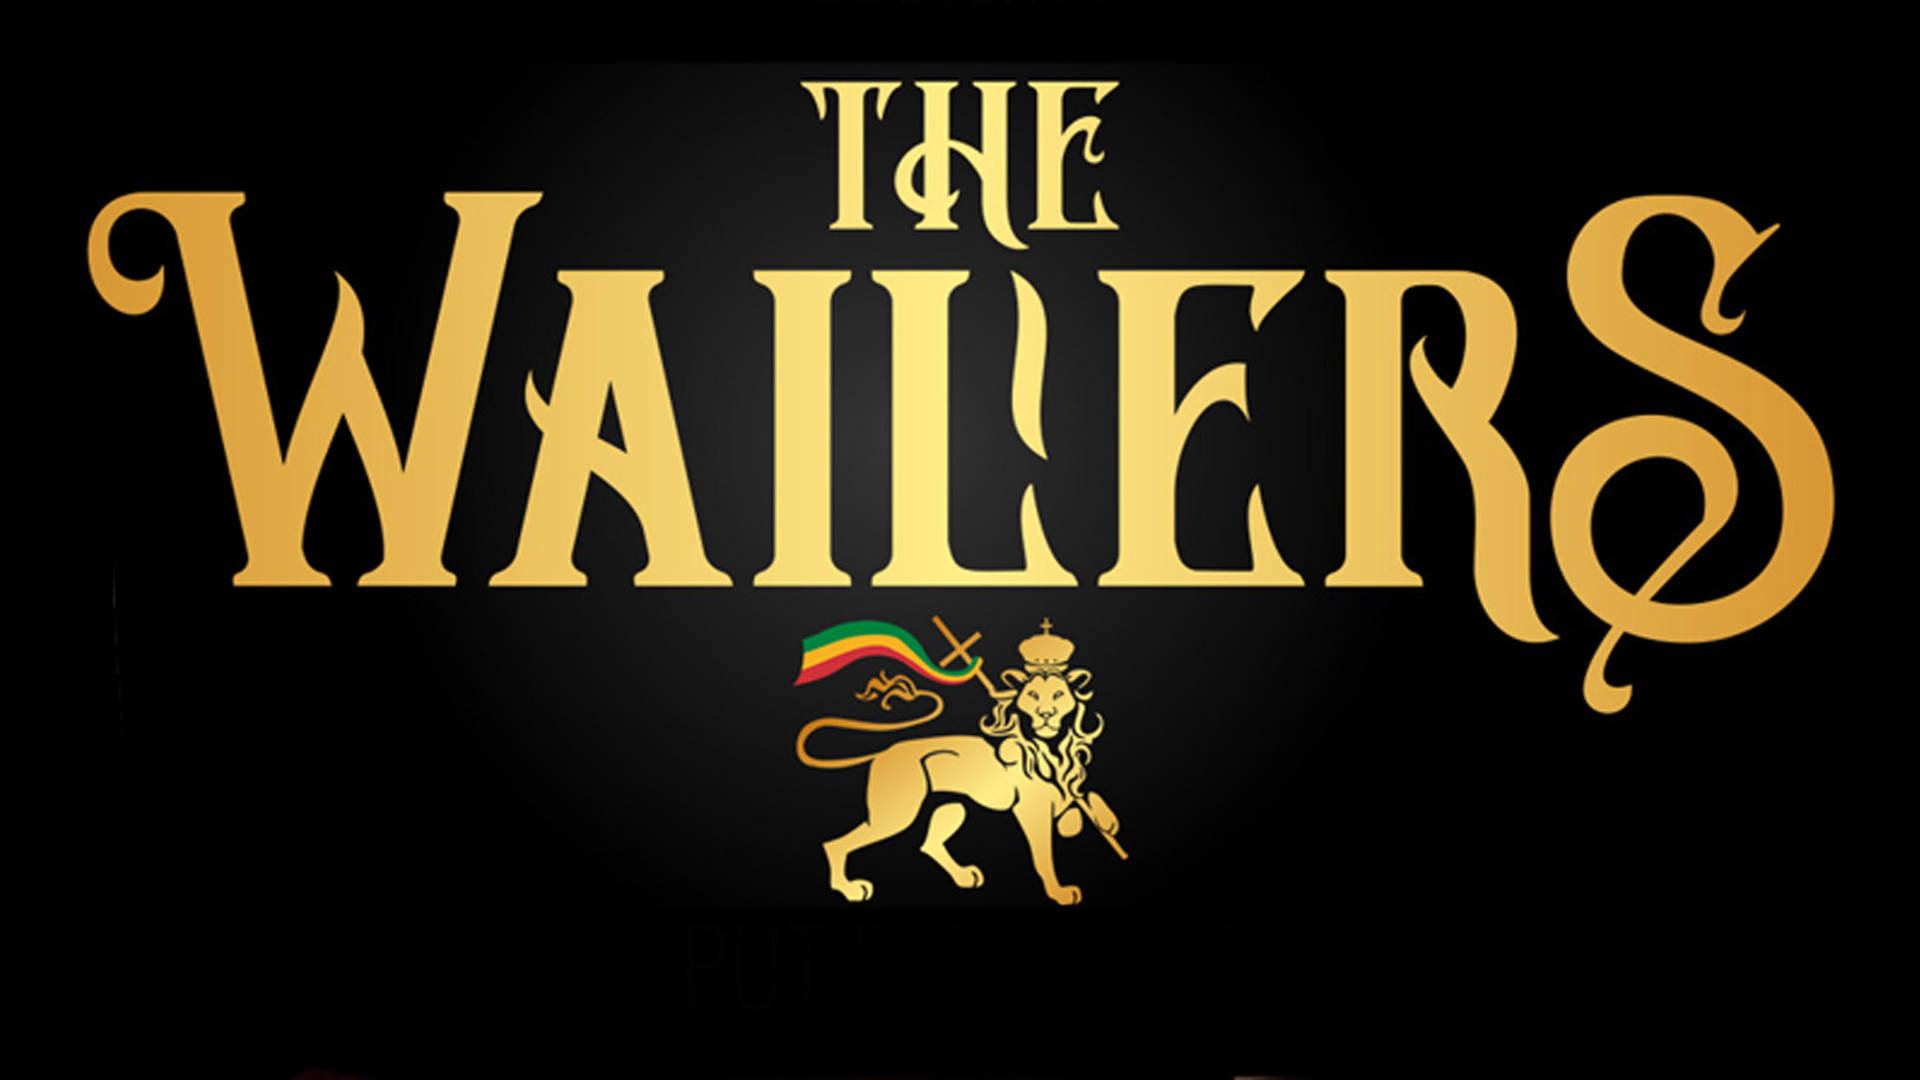 Bob Marley Og Wailers 2048 X 1152 Wallpaper